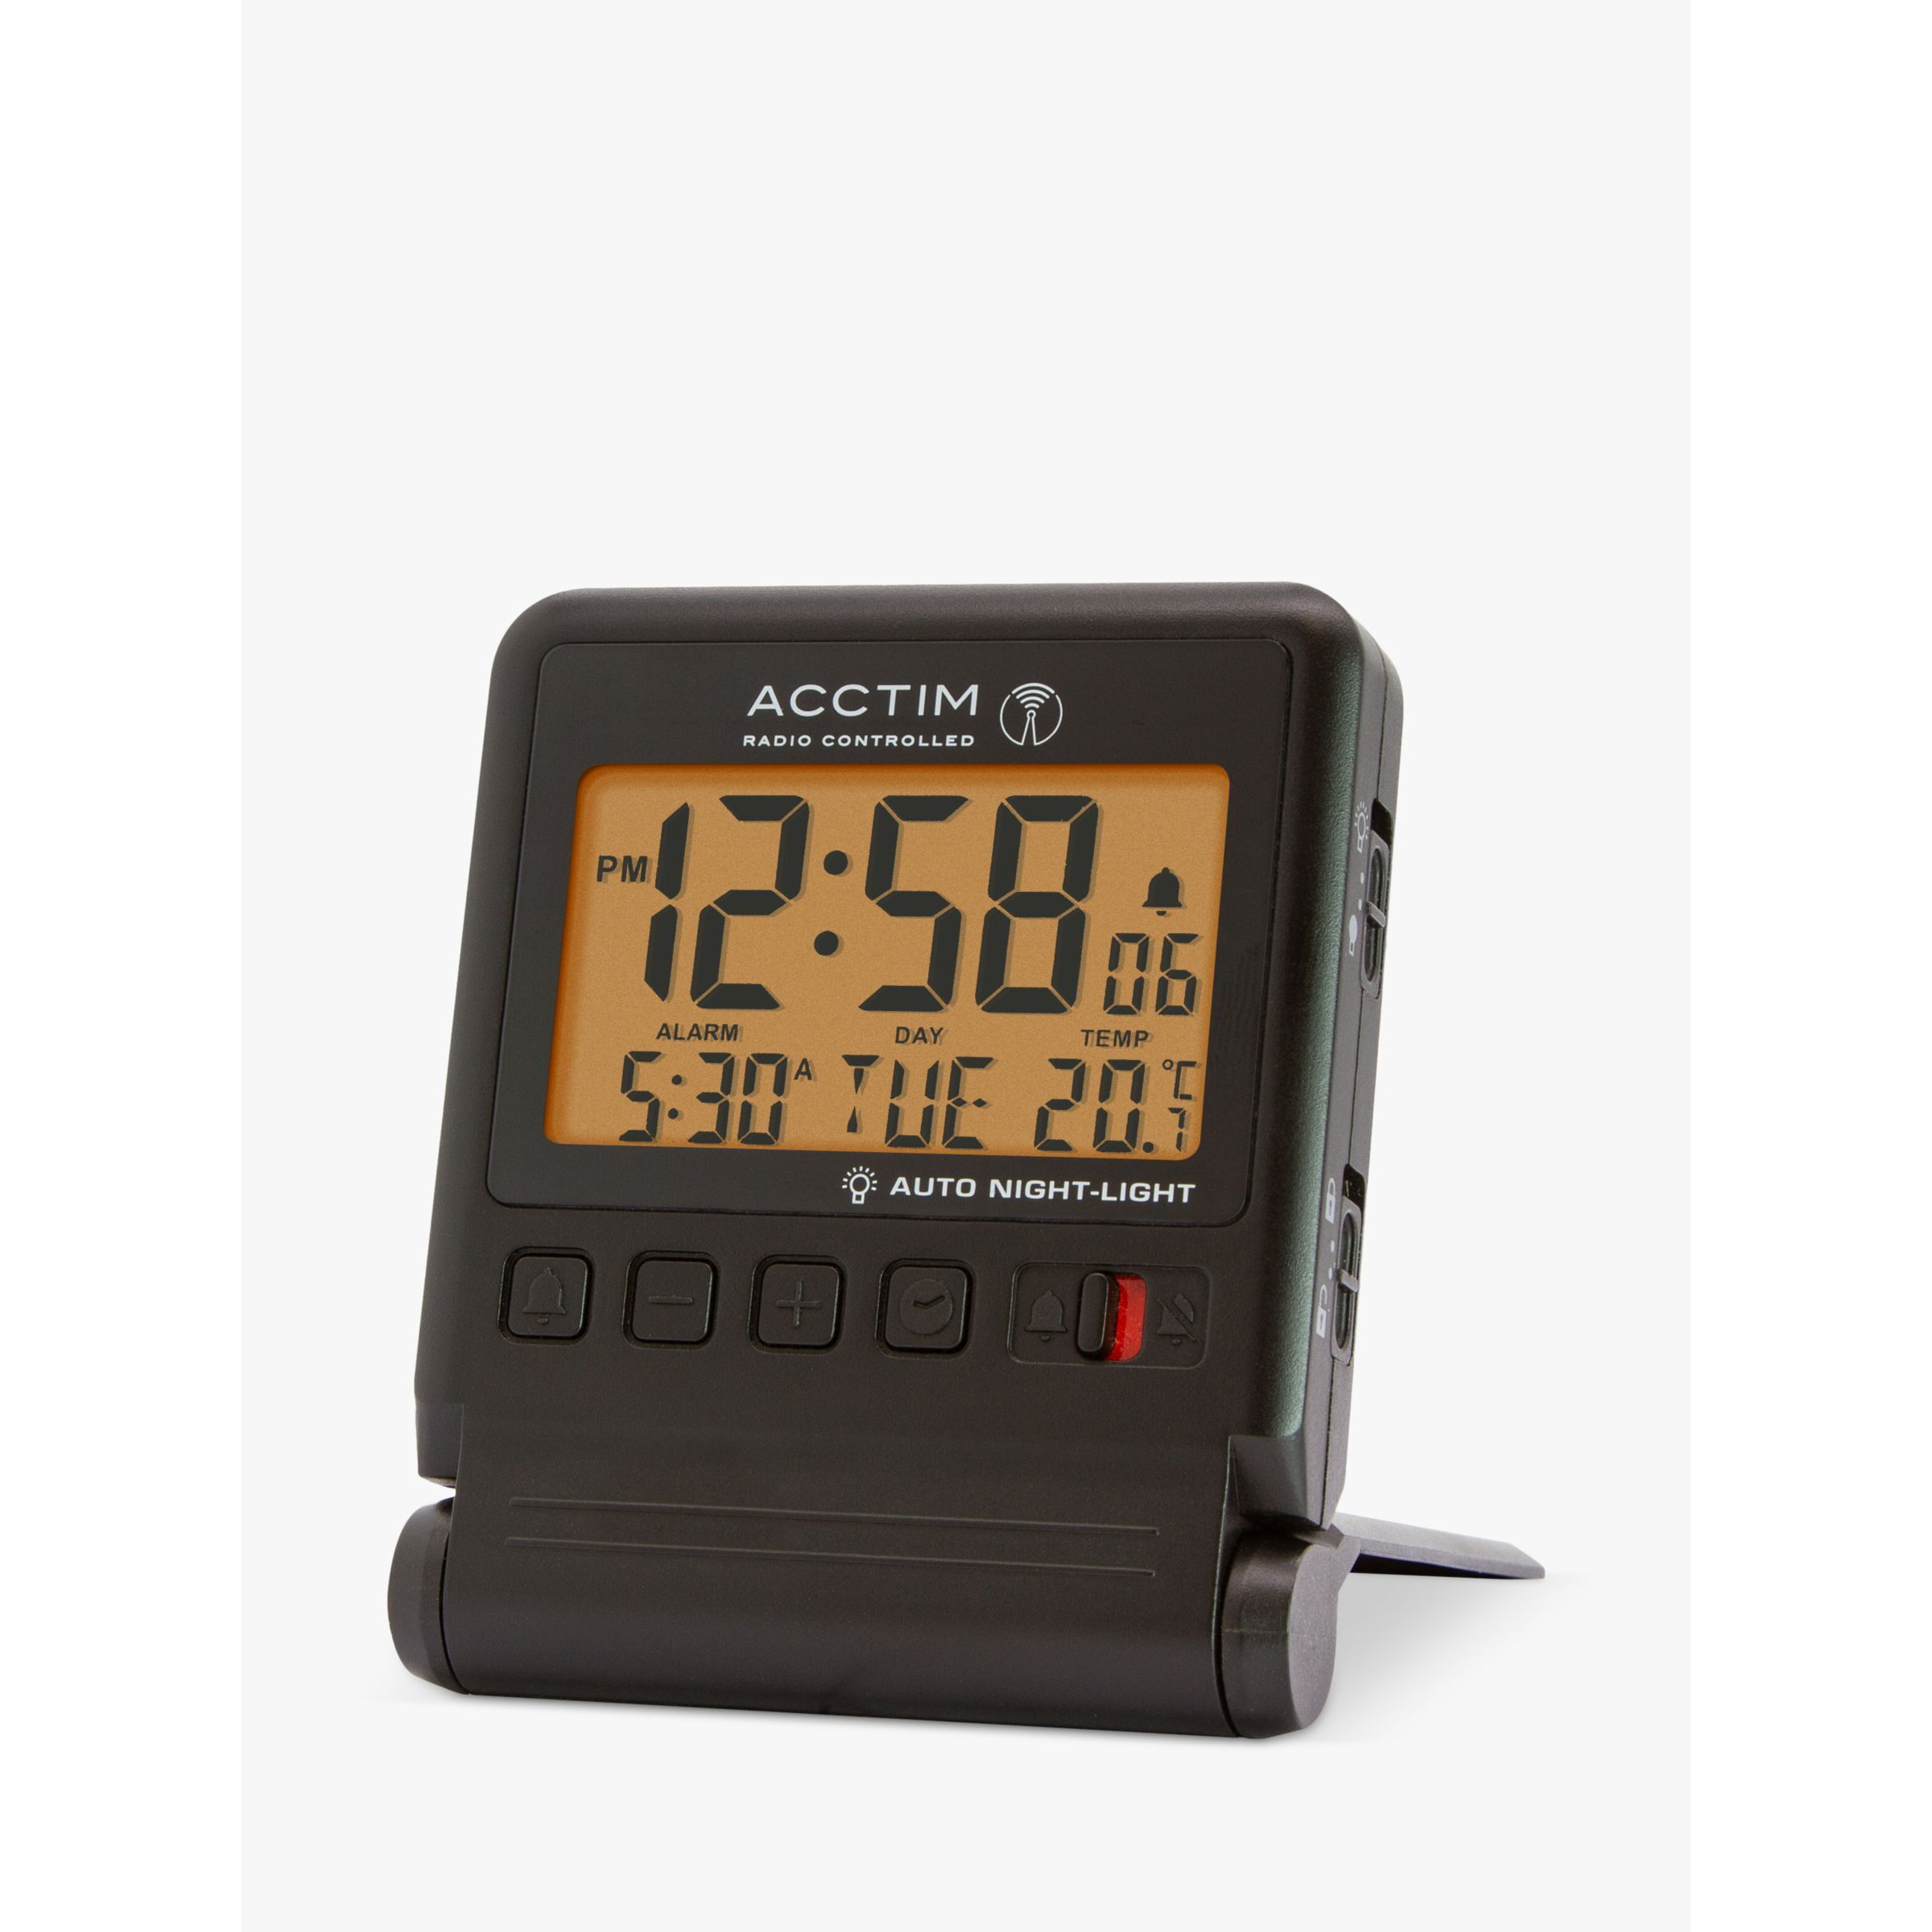 Acctim Radio Controlled Digital Travel Alarm Clock, Black - image 1